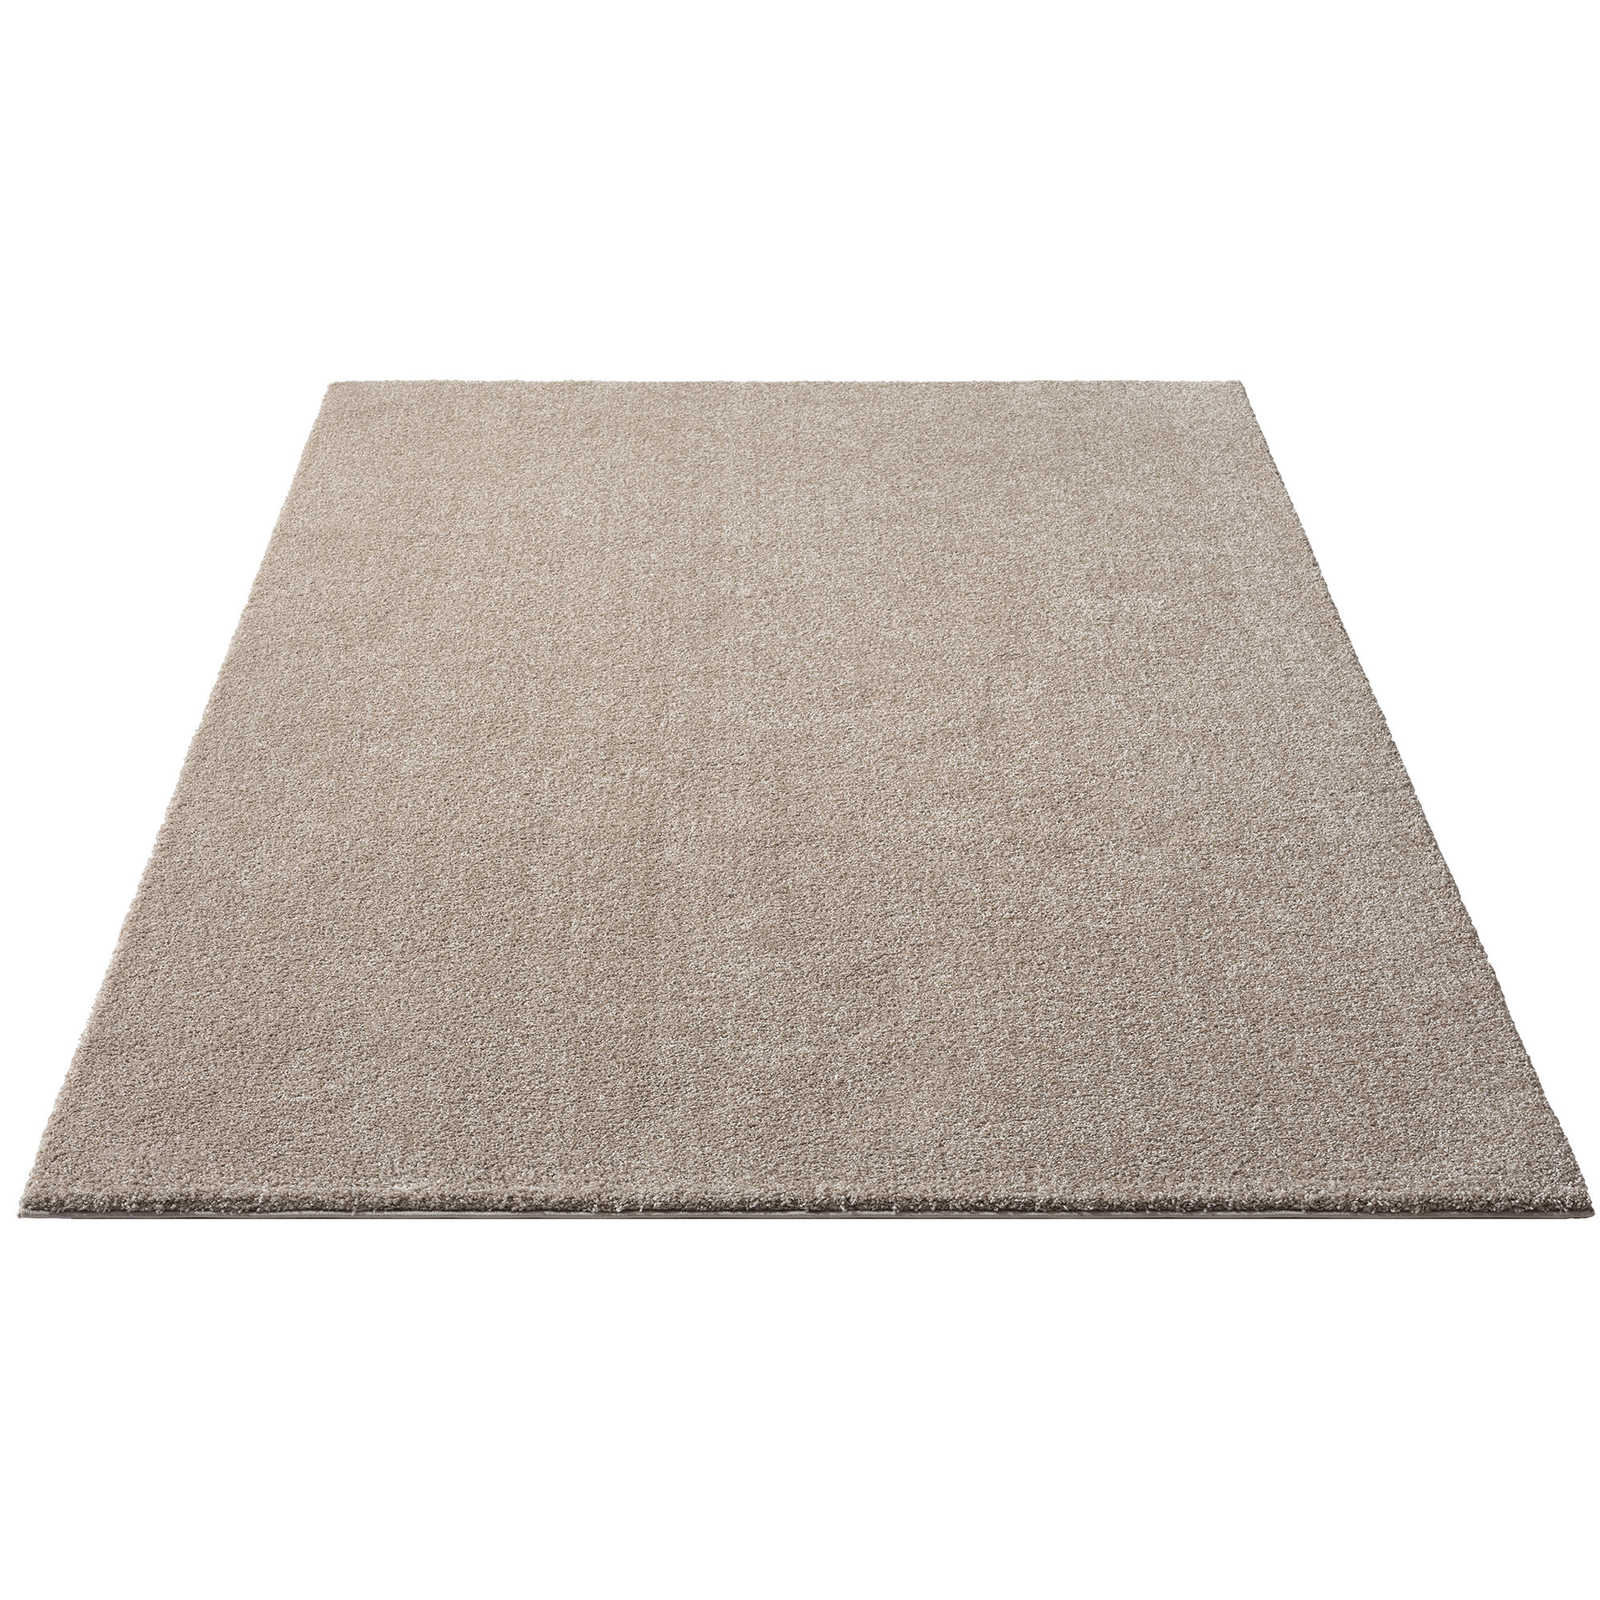 Soft short pile carpet in beige - 290 x 200 cm
